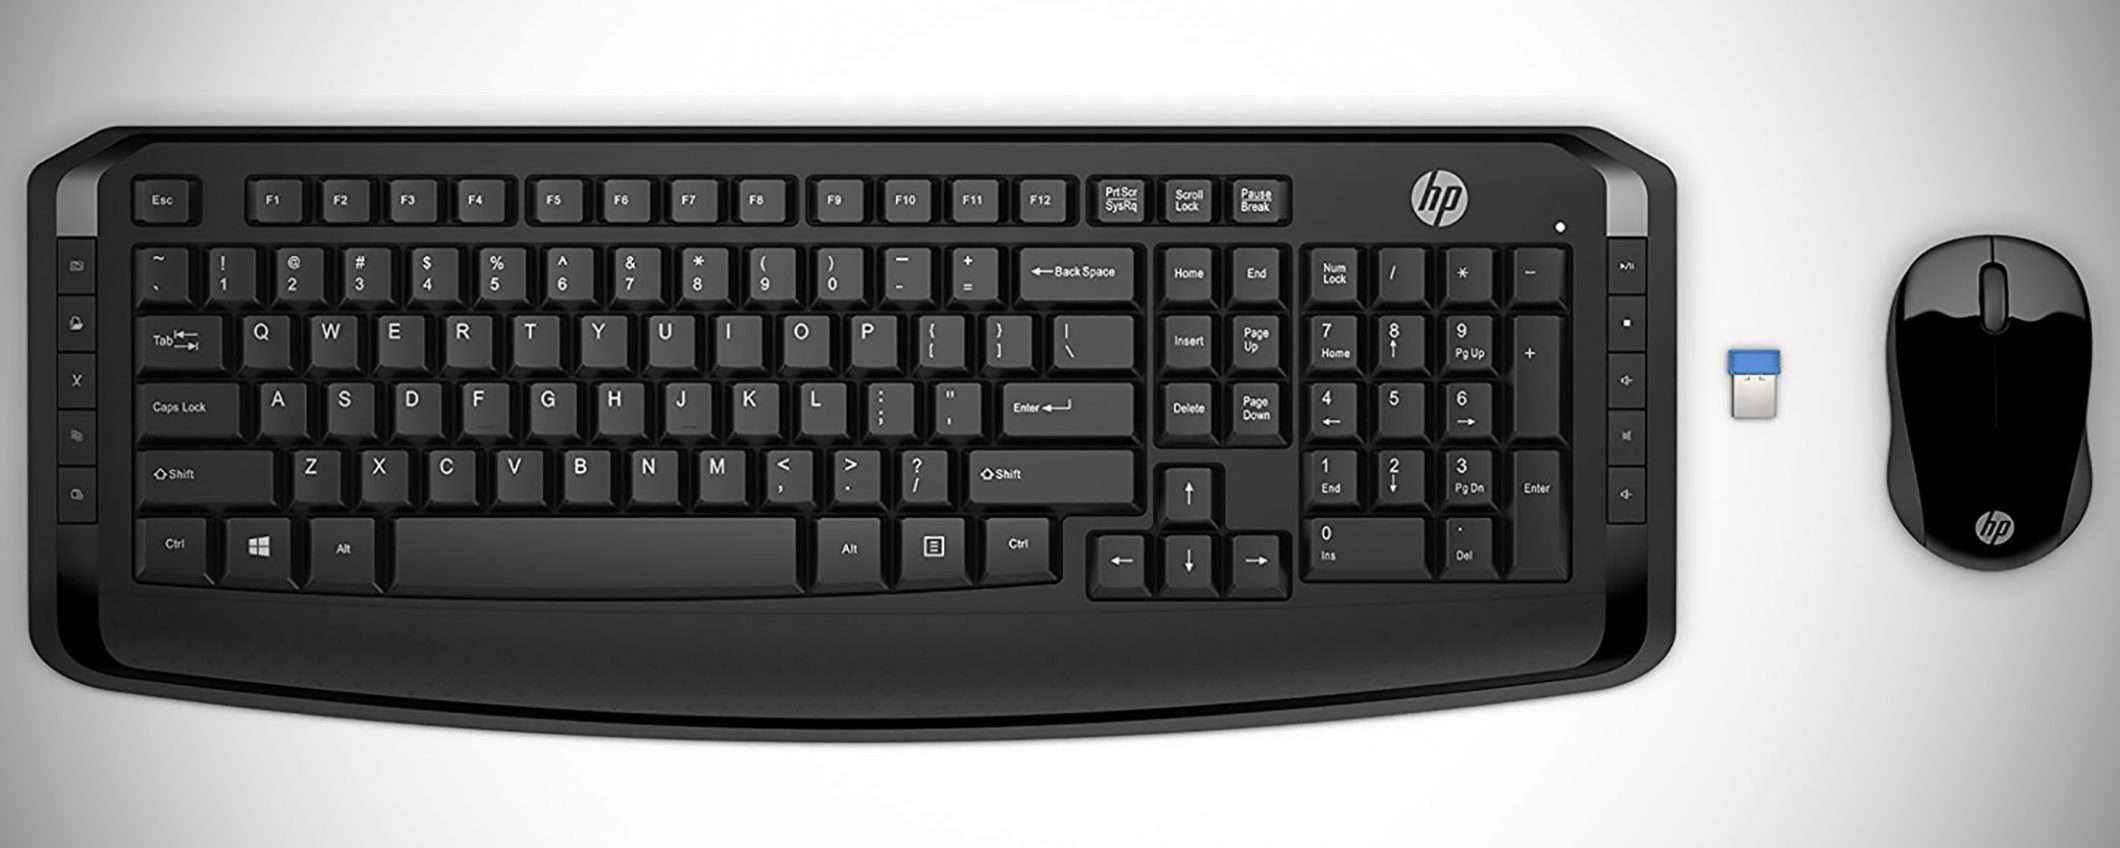 Cyber Monday: offerta tastiera e mouse wireless HP